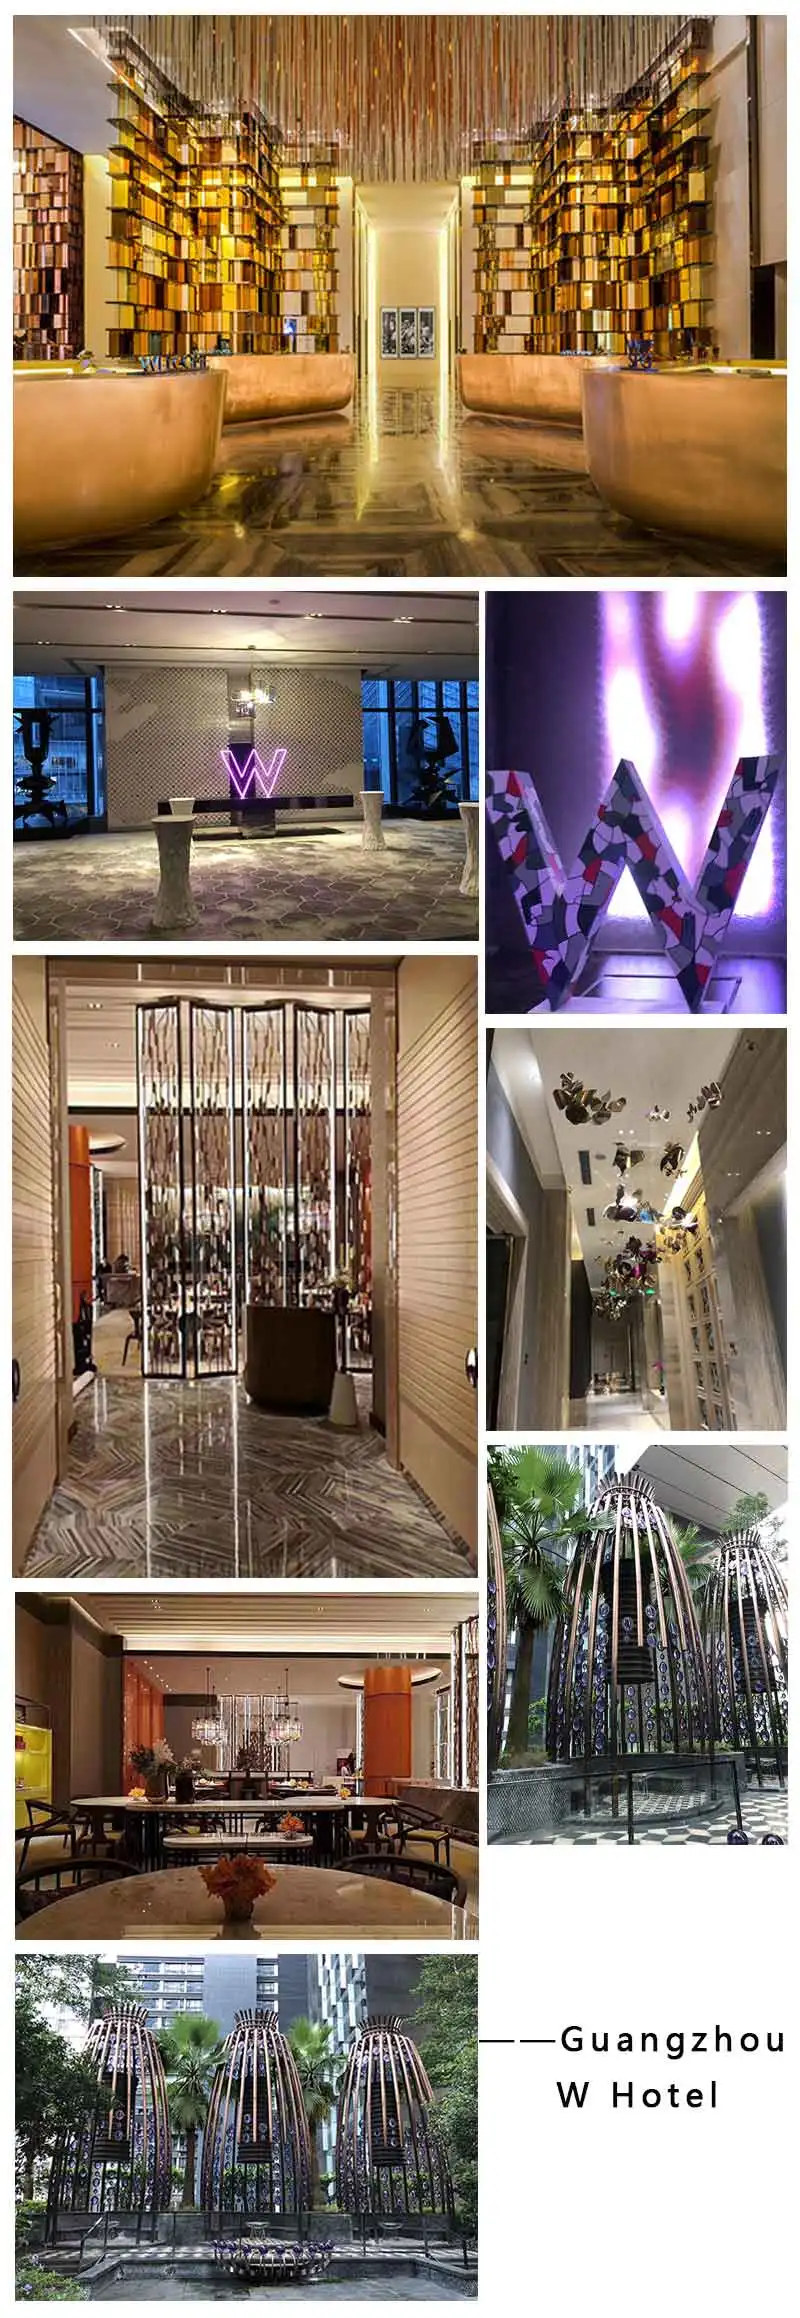 Guangzhou W hotel decoration project